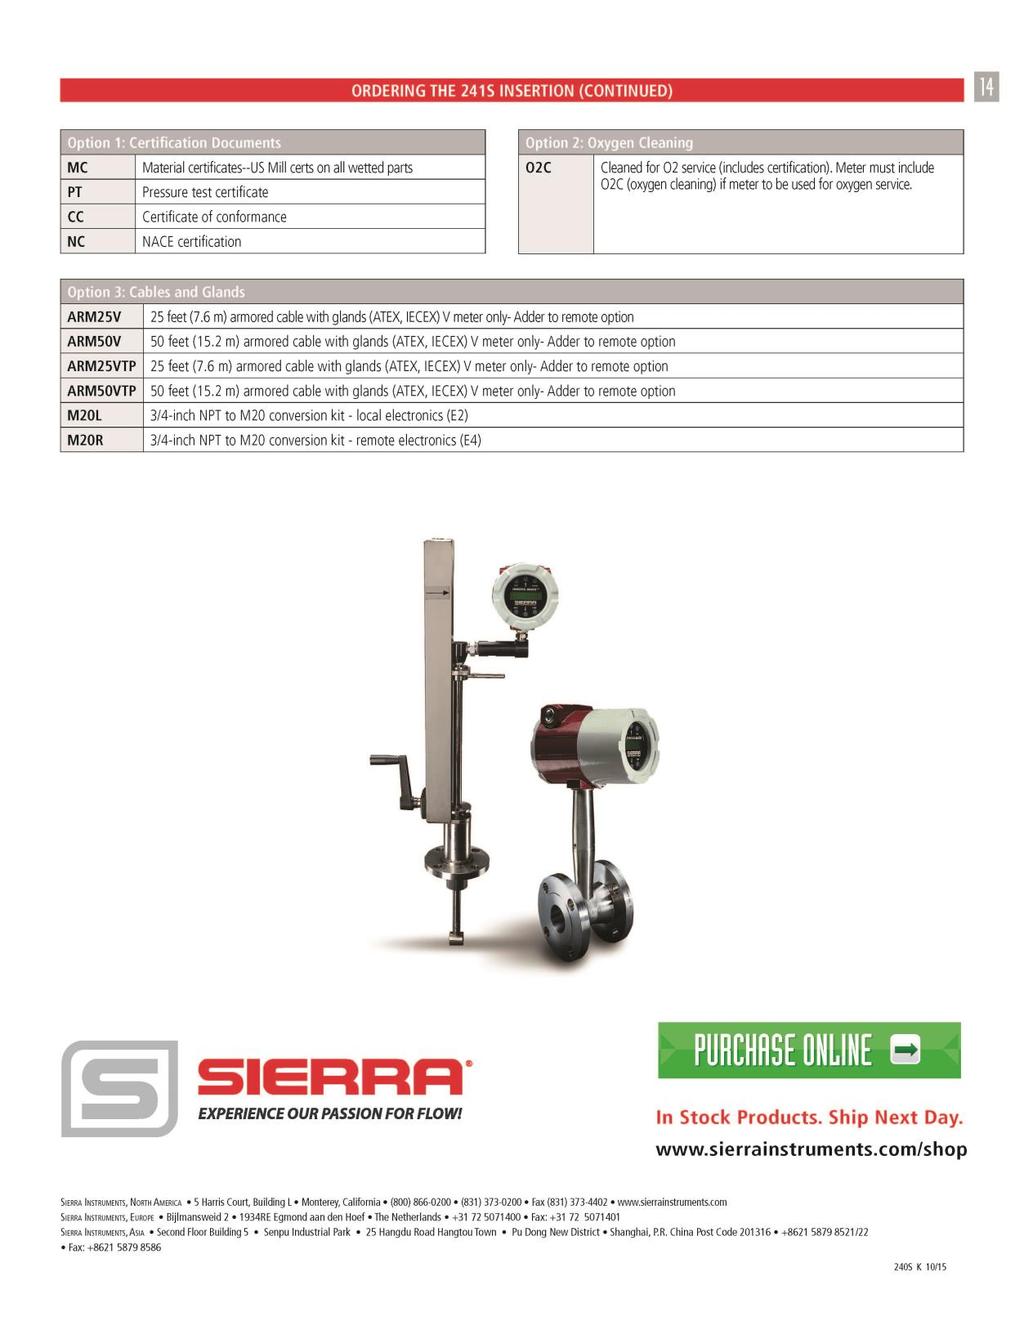 Sierra 240/241 Series Instruction